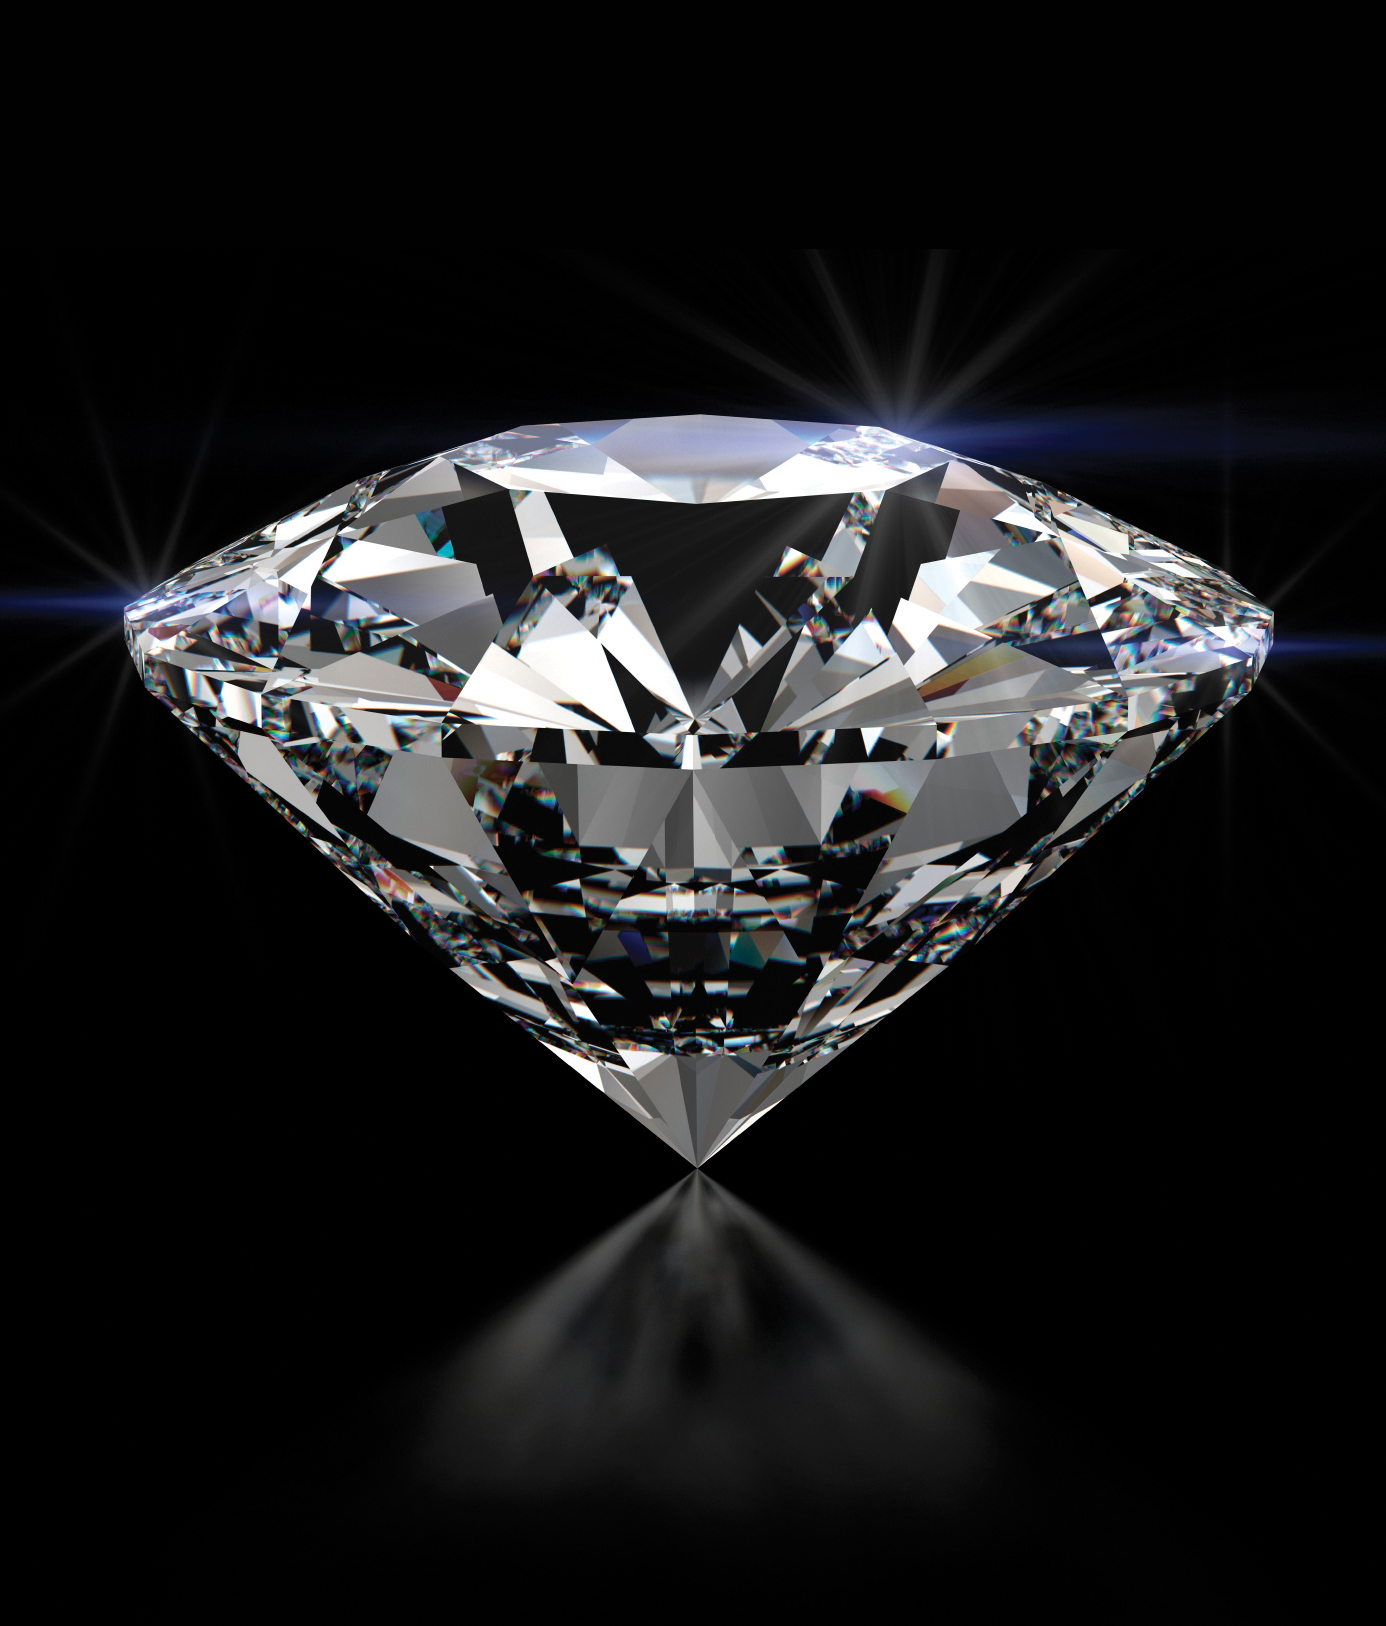 Shine bright like a diamond | Legacy Online Marketing